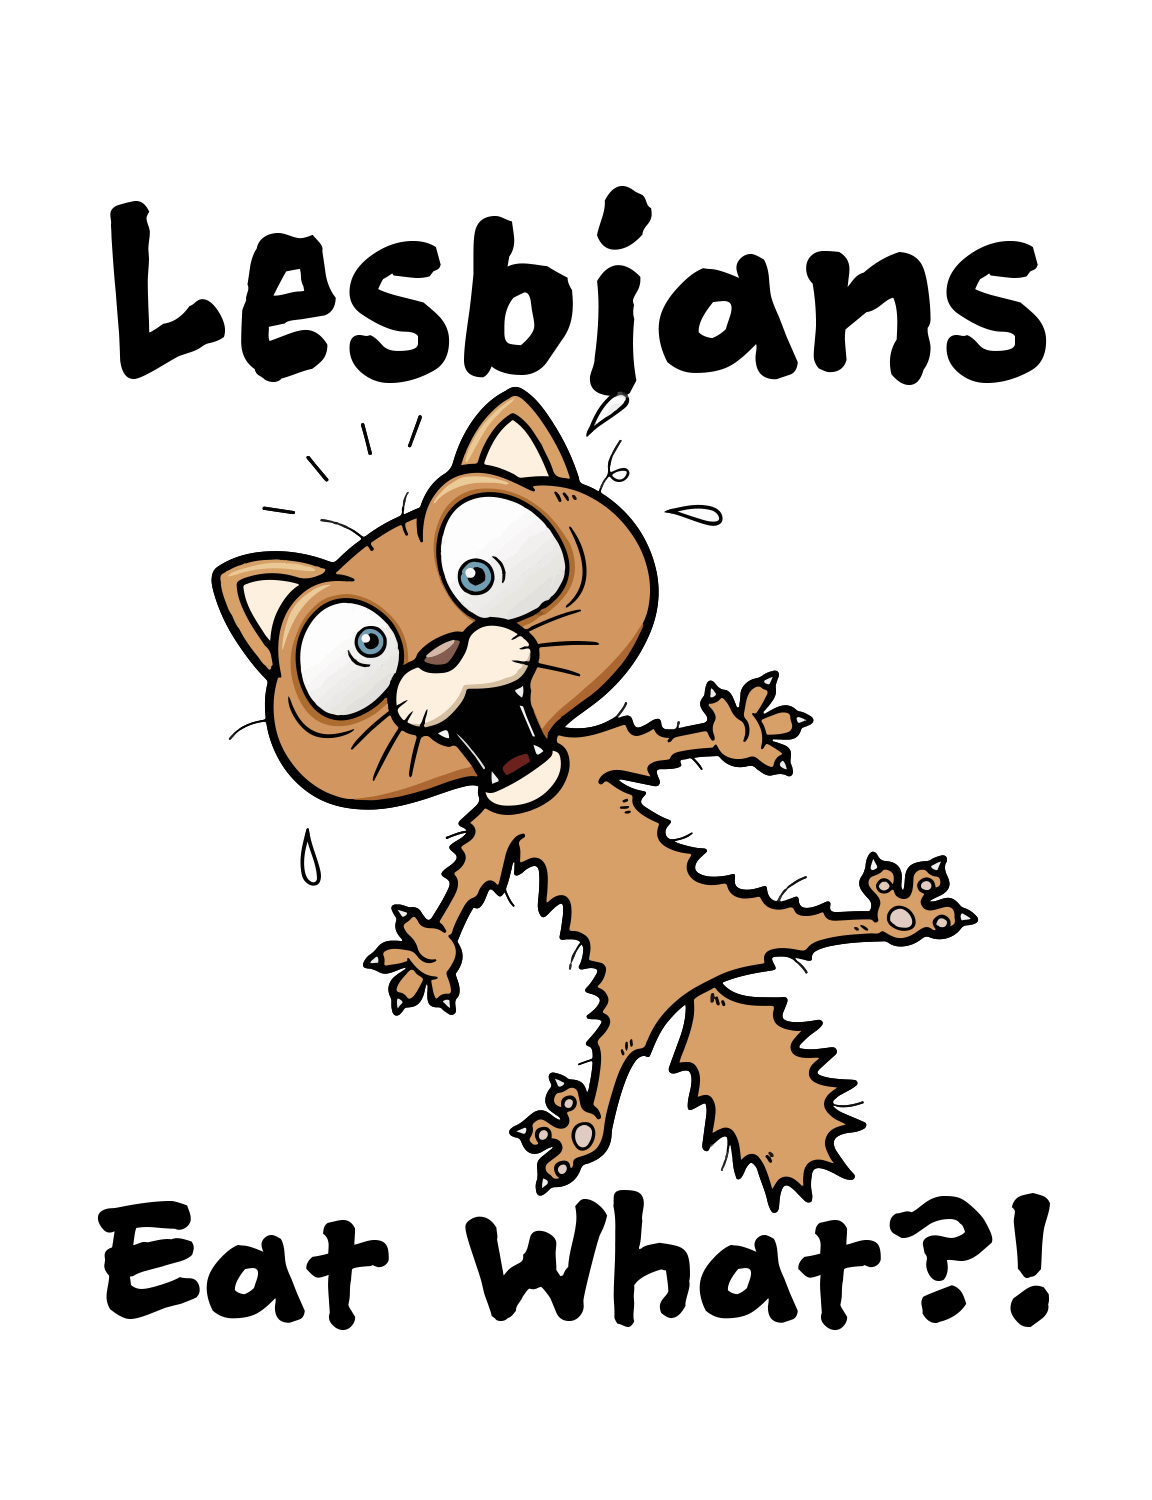 Lesbians Eat What_WHTProduct Image.